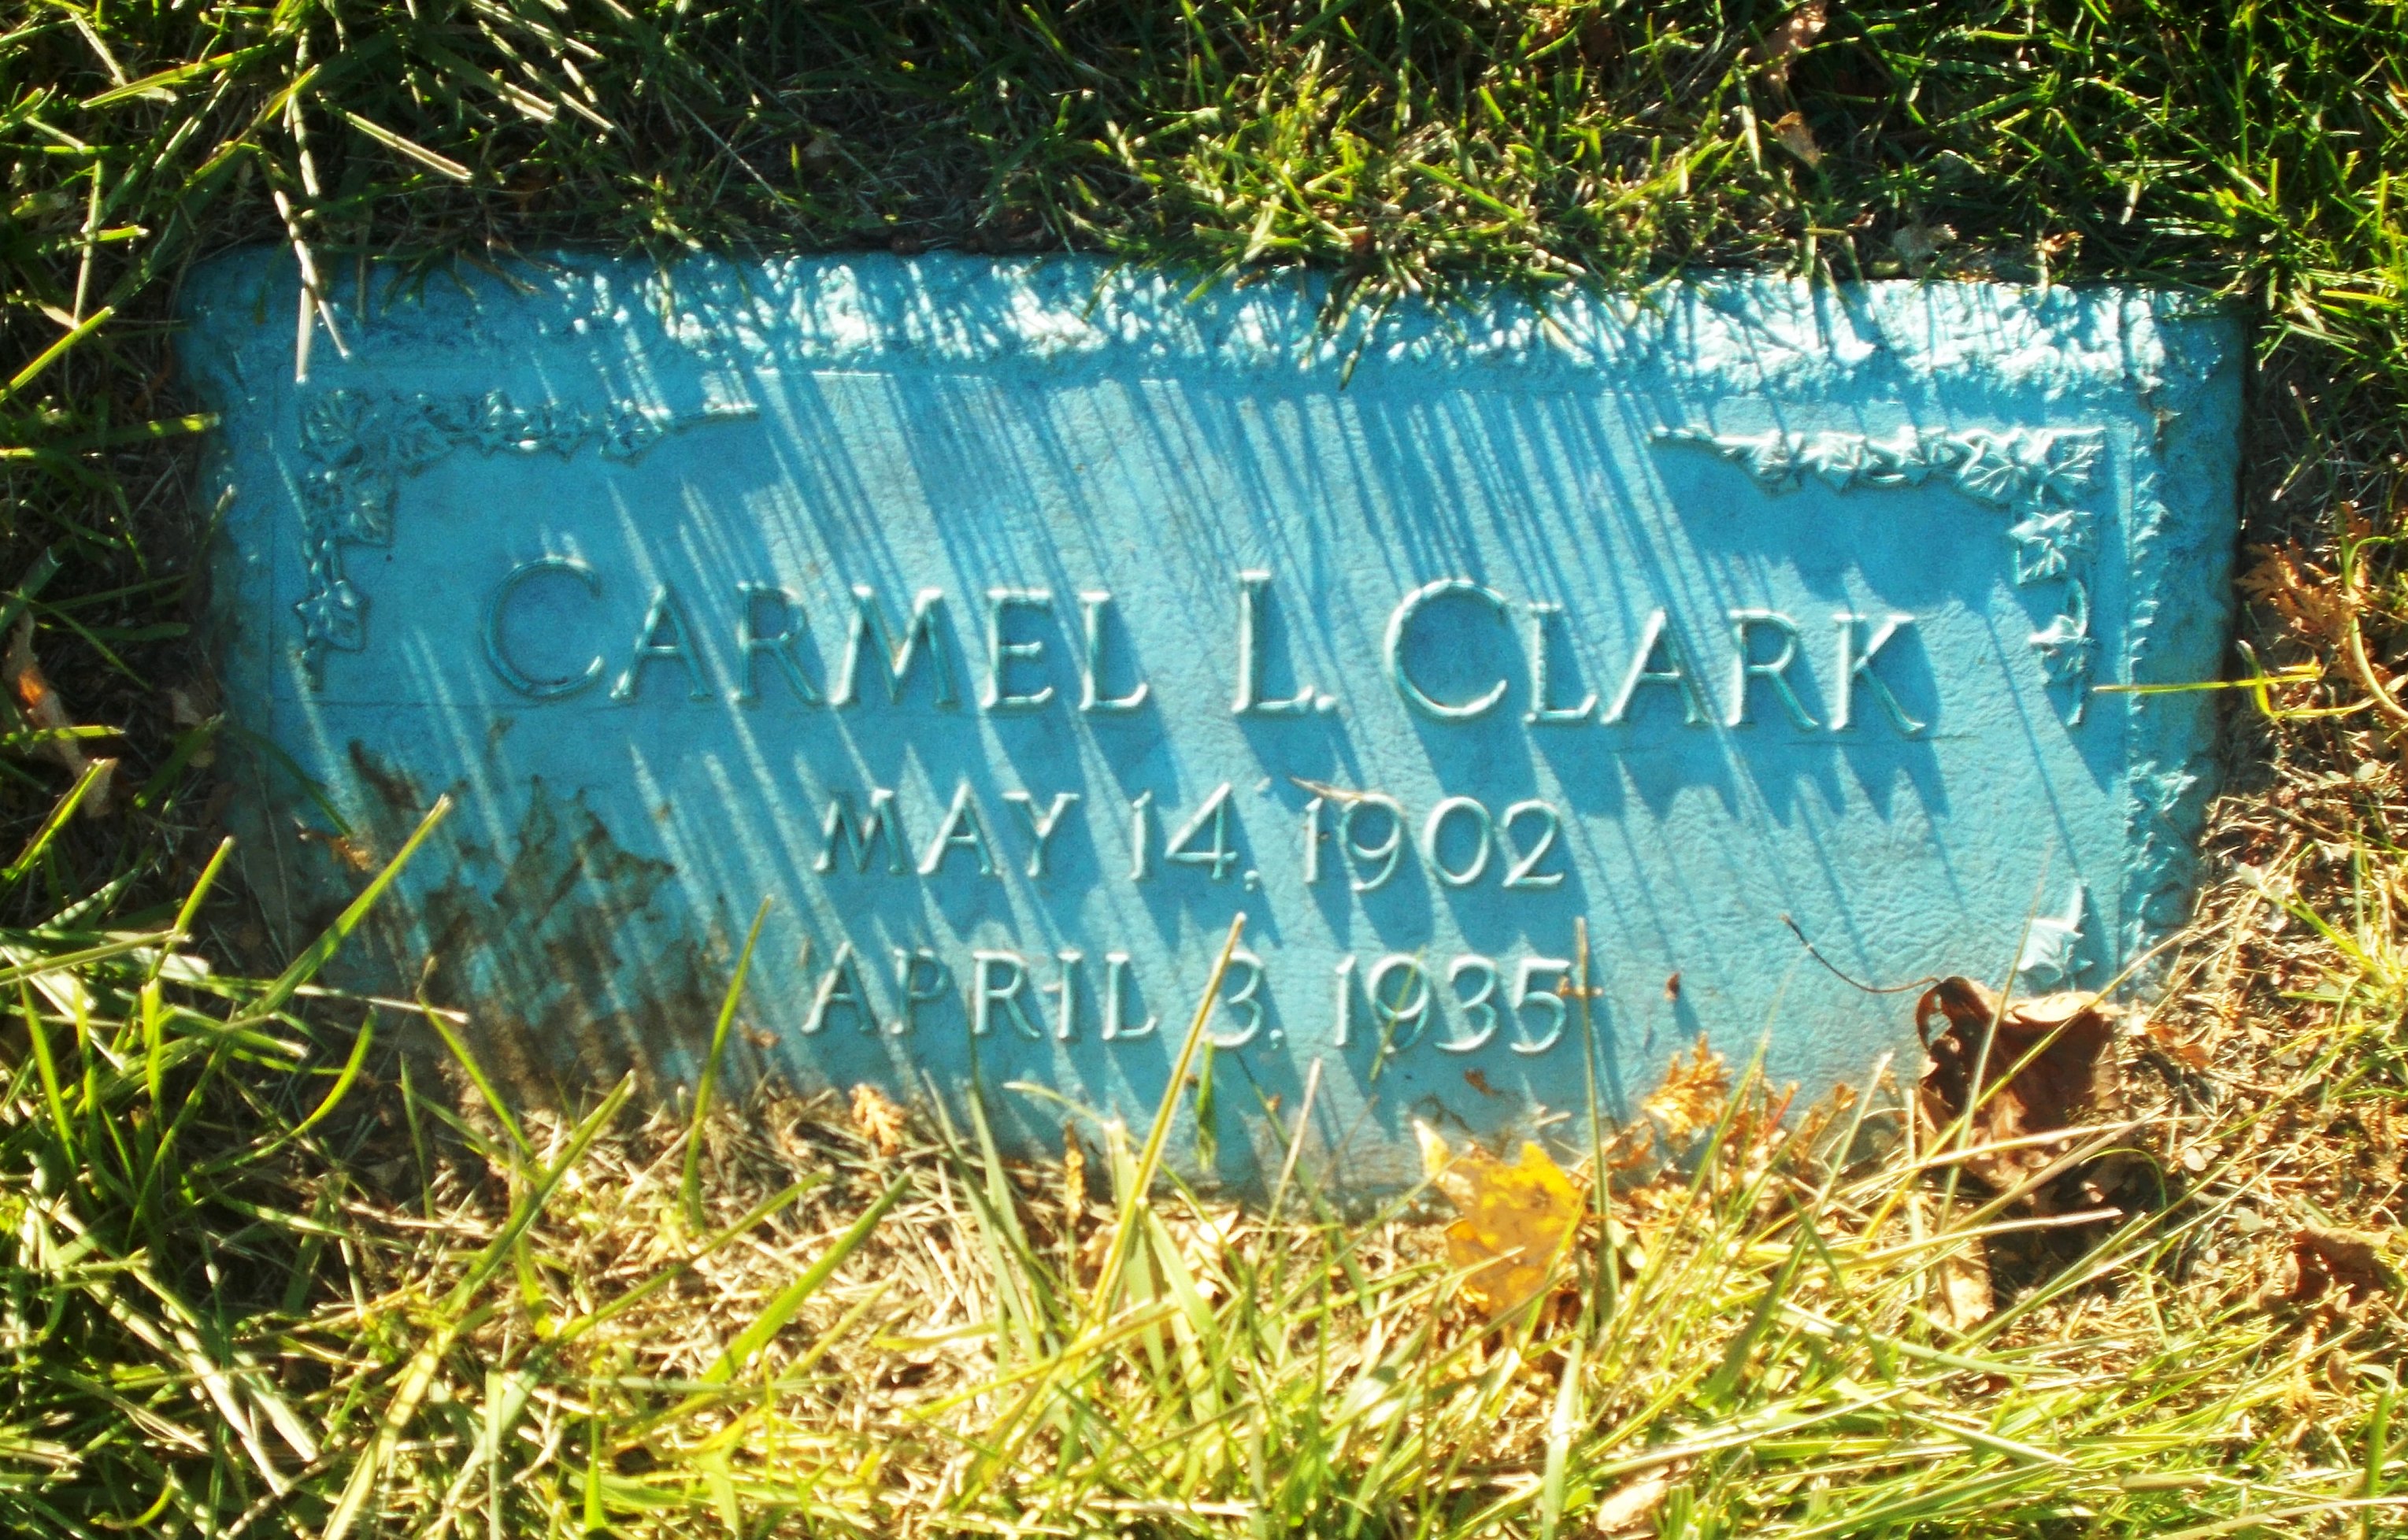 Carmel L Clark